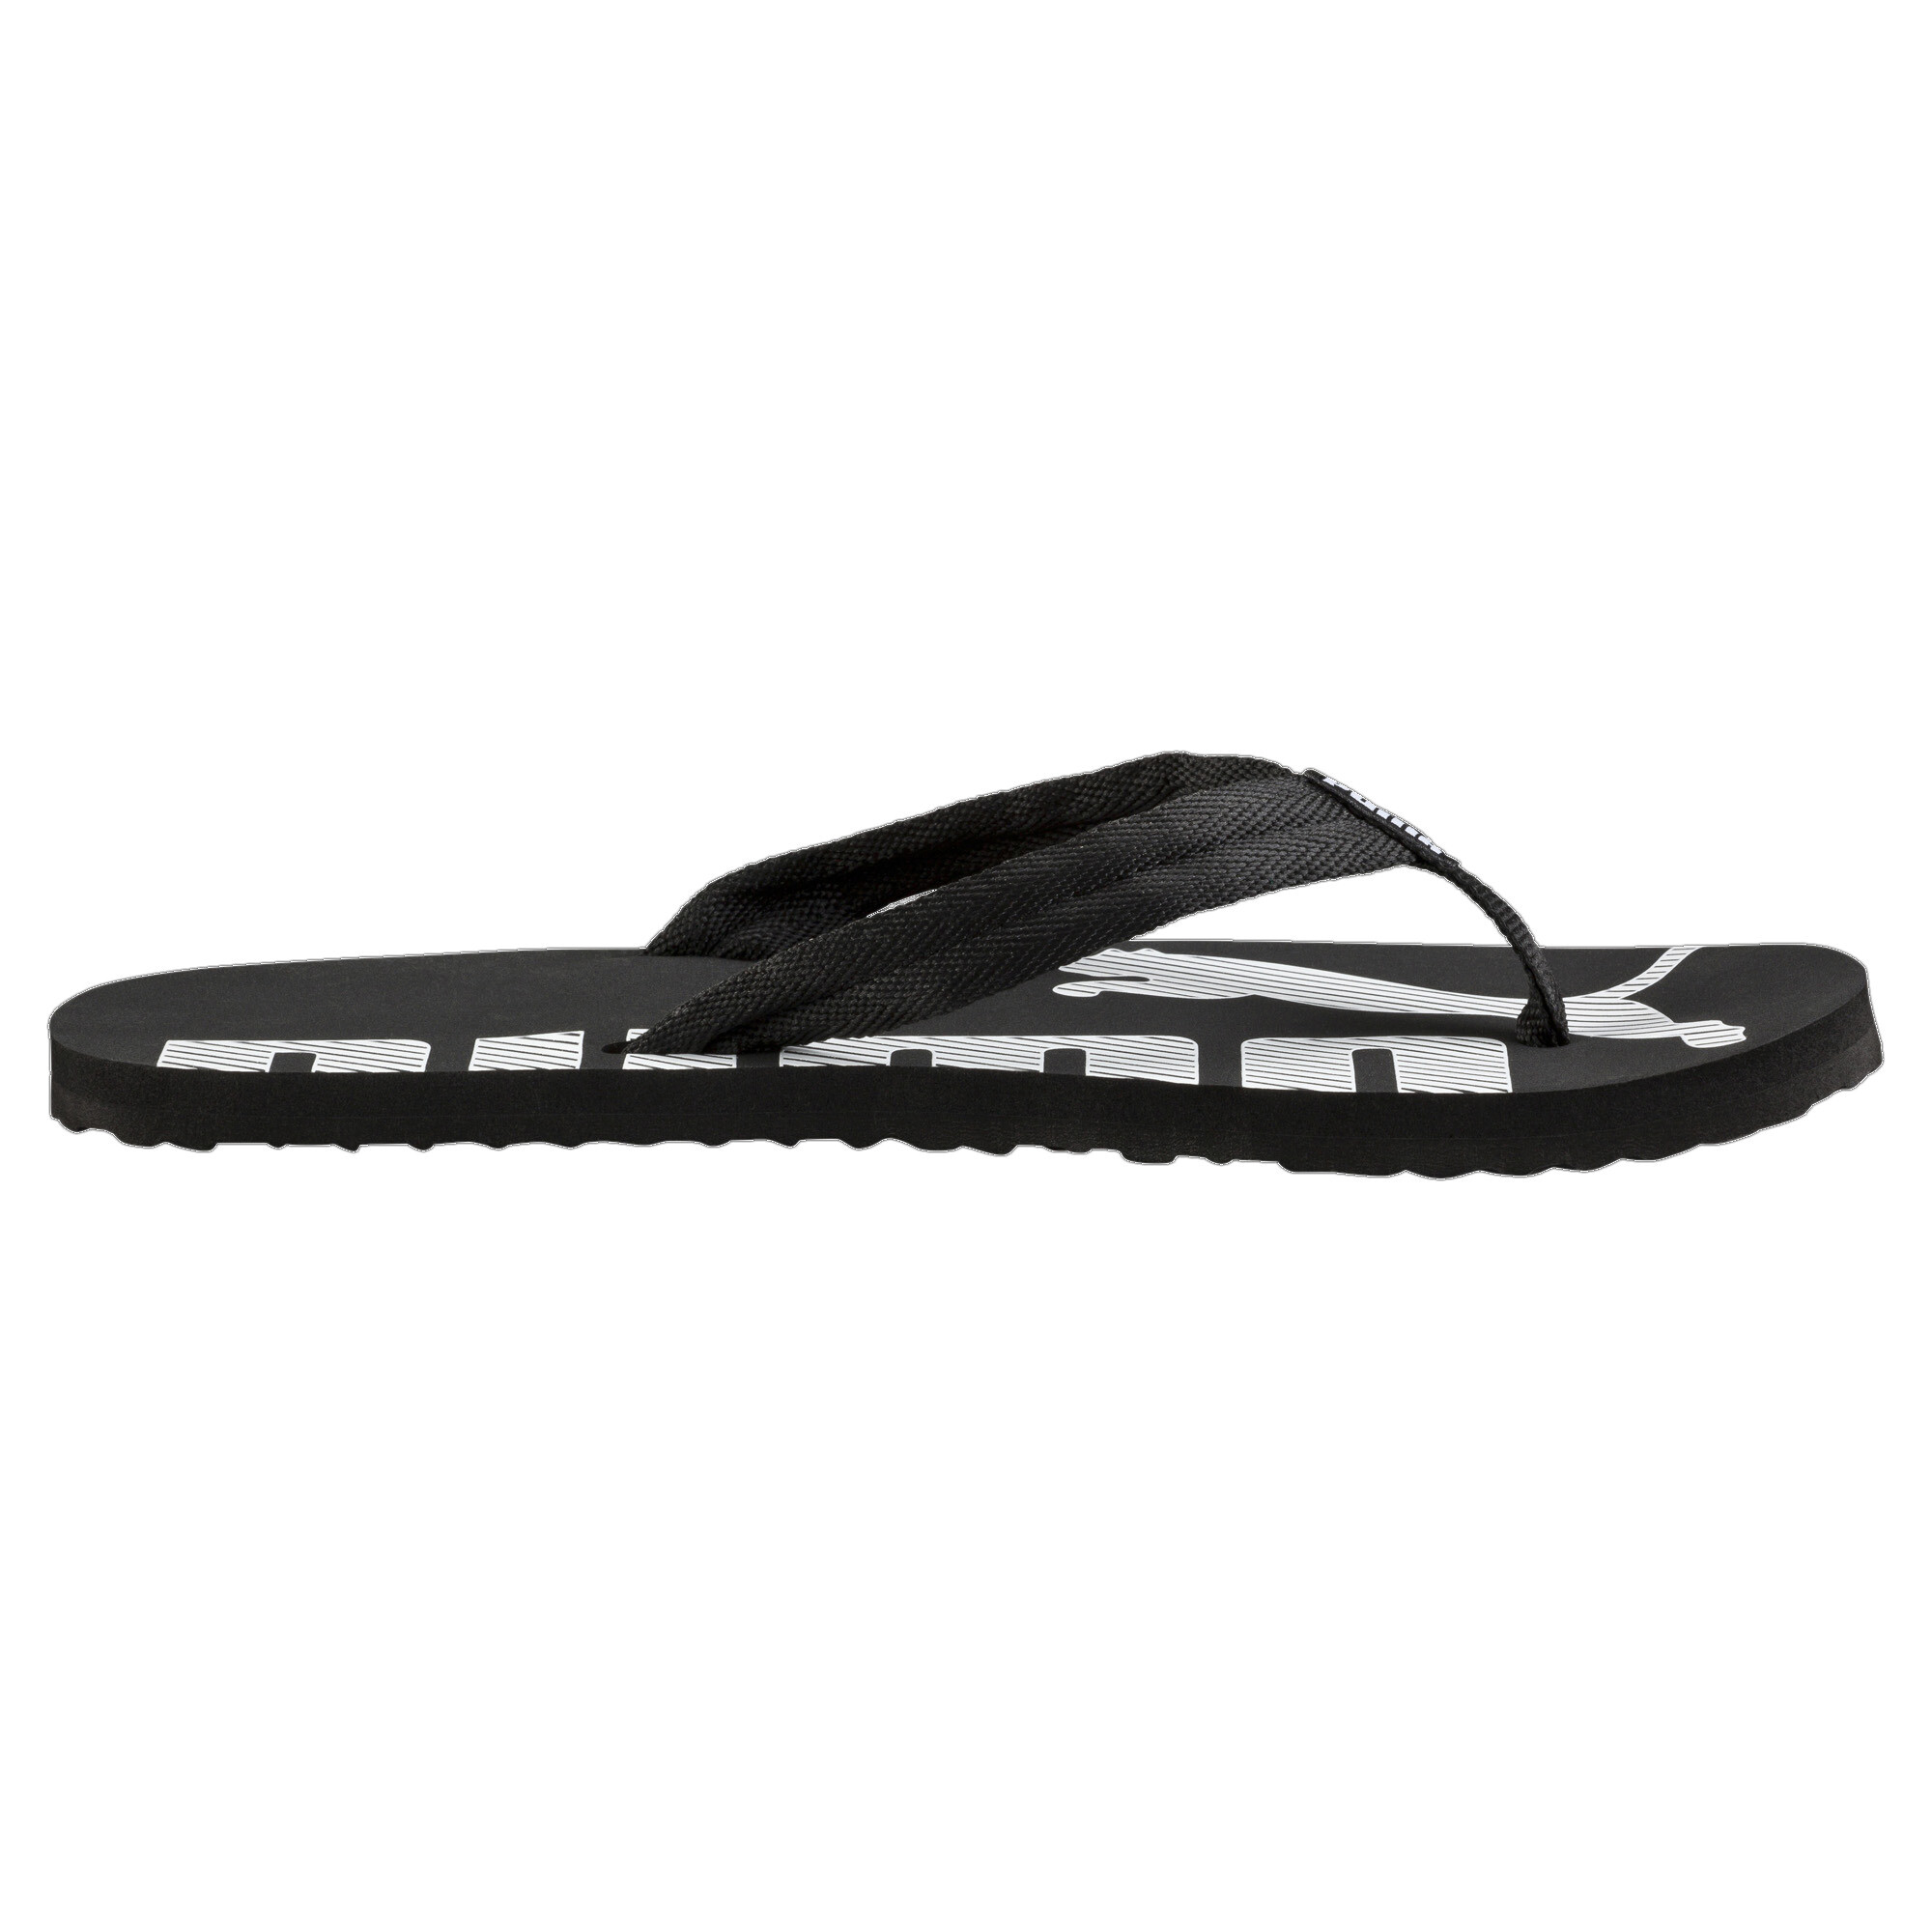 Men's PUMA Epic Flip V2 Sandals In Black, Size EU 43